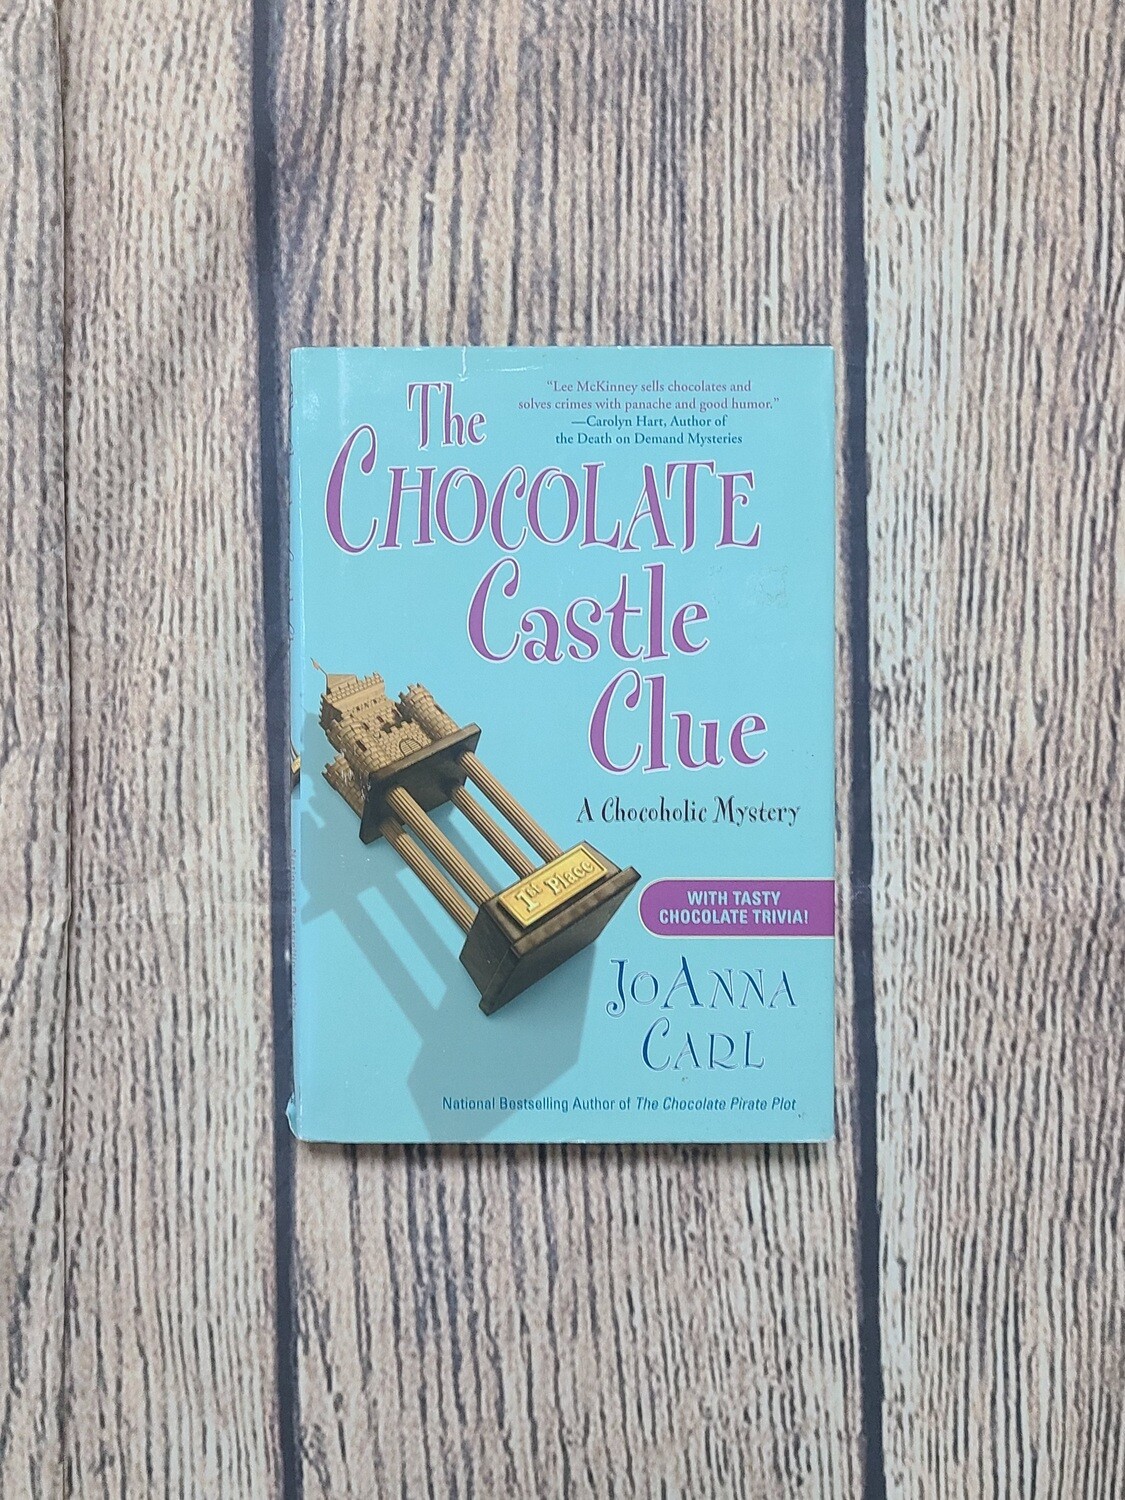 The Chocolate Castle Clue by JoAnna Carl